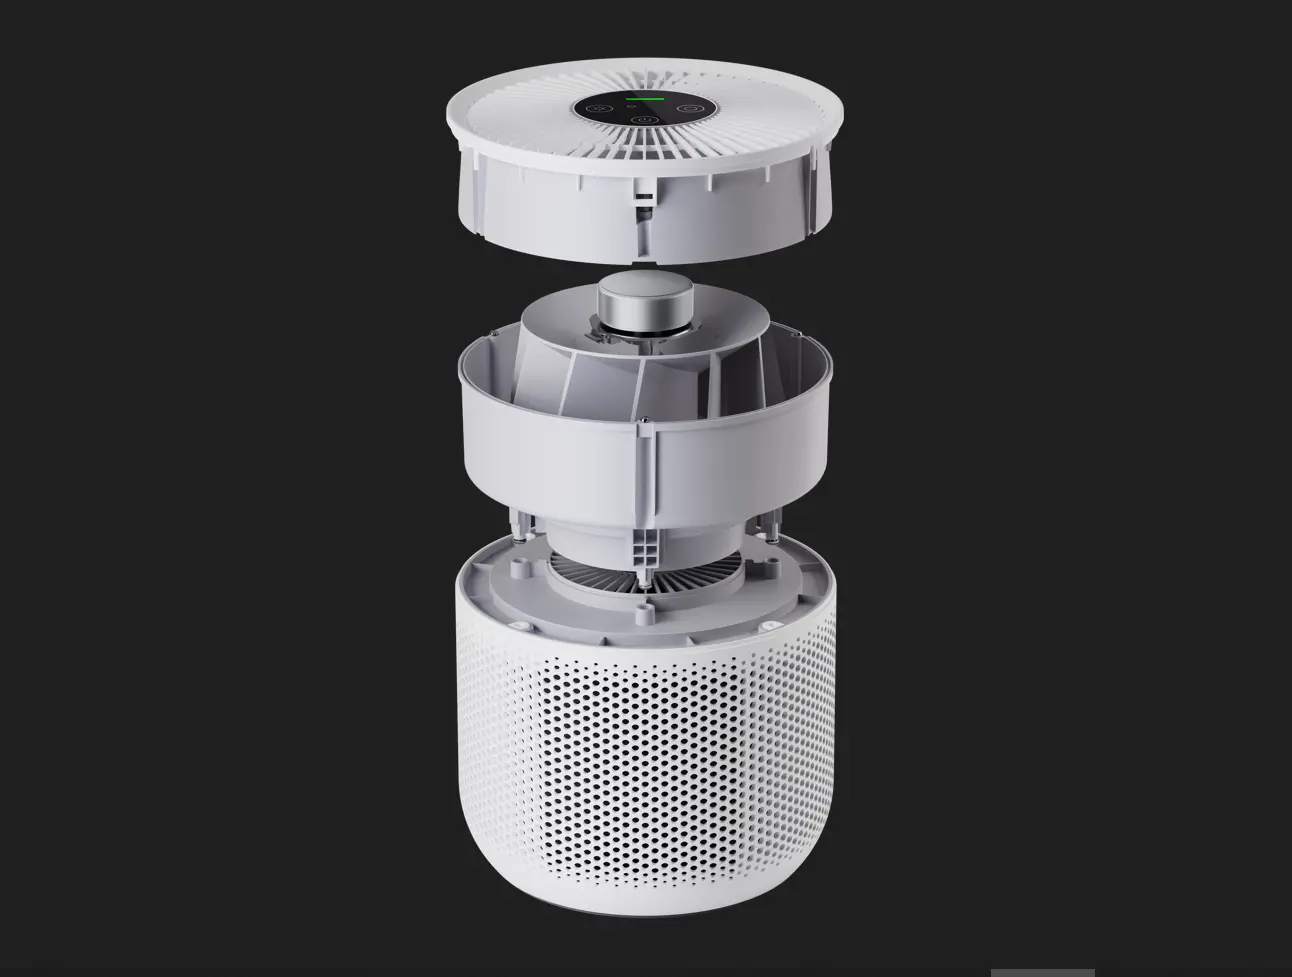 Pročišćivač zraka XIAOMI Smart Air Purifier 4 Compact EU